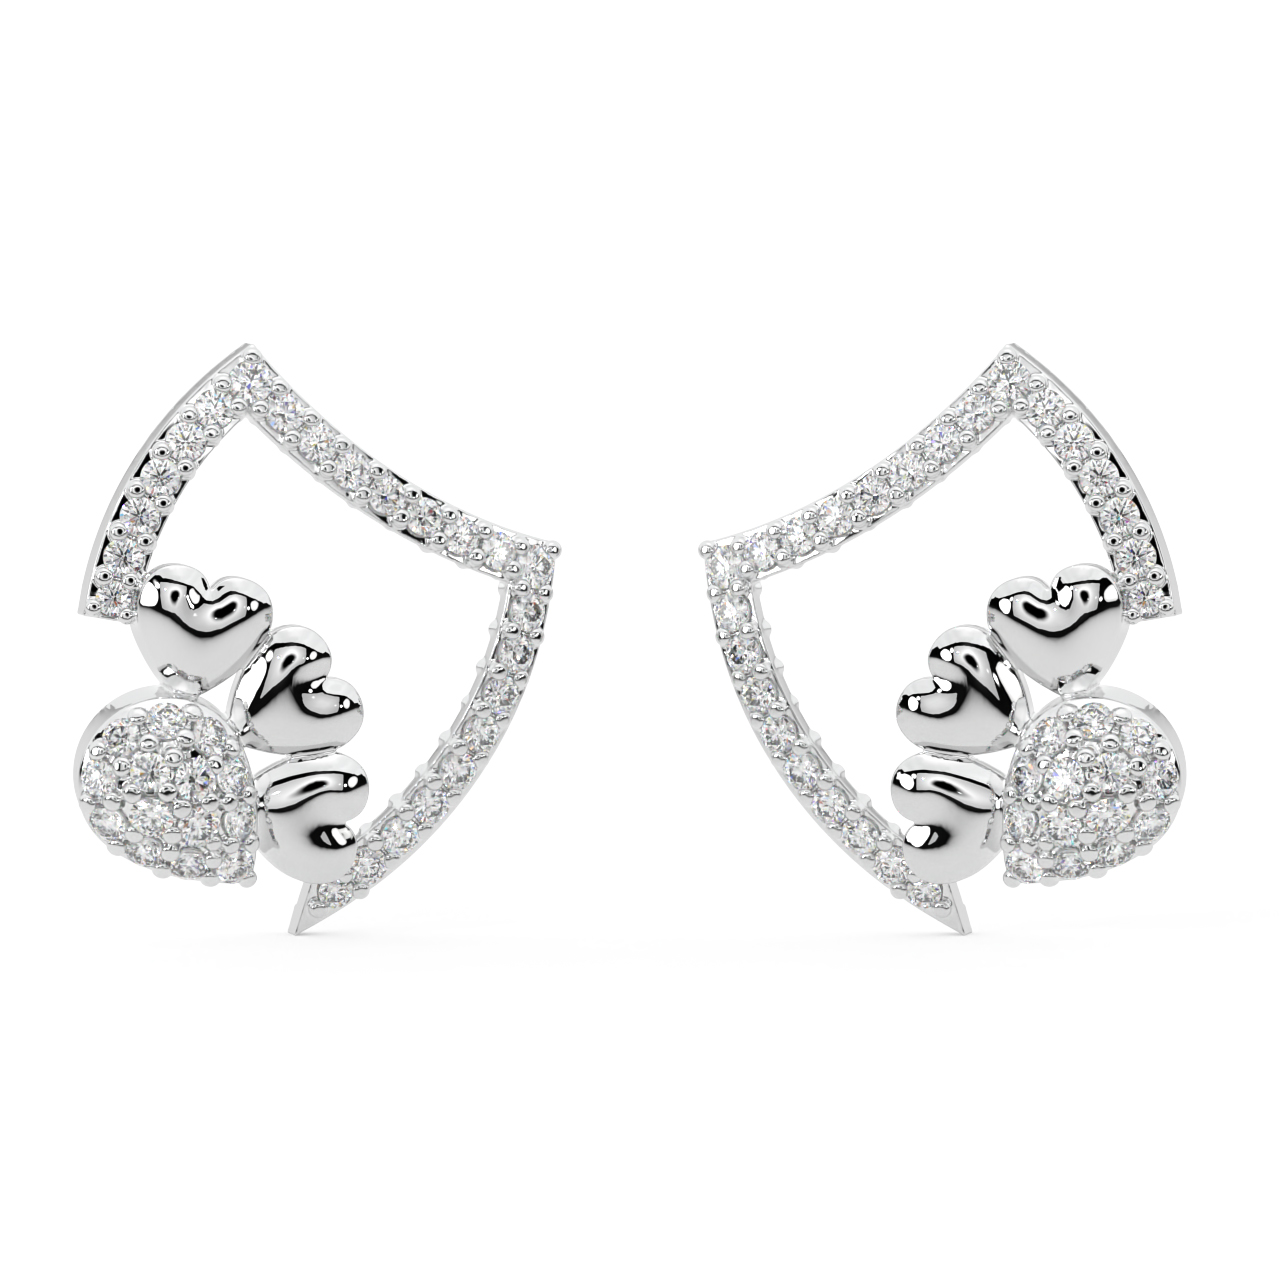 Ace of Hearts Diamond Earrings